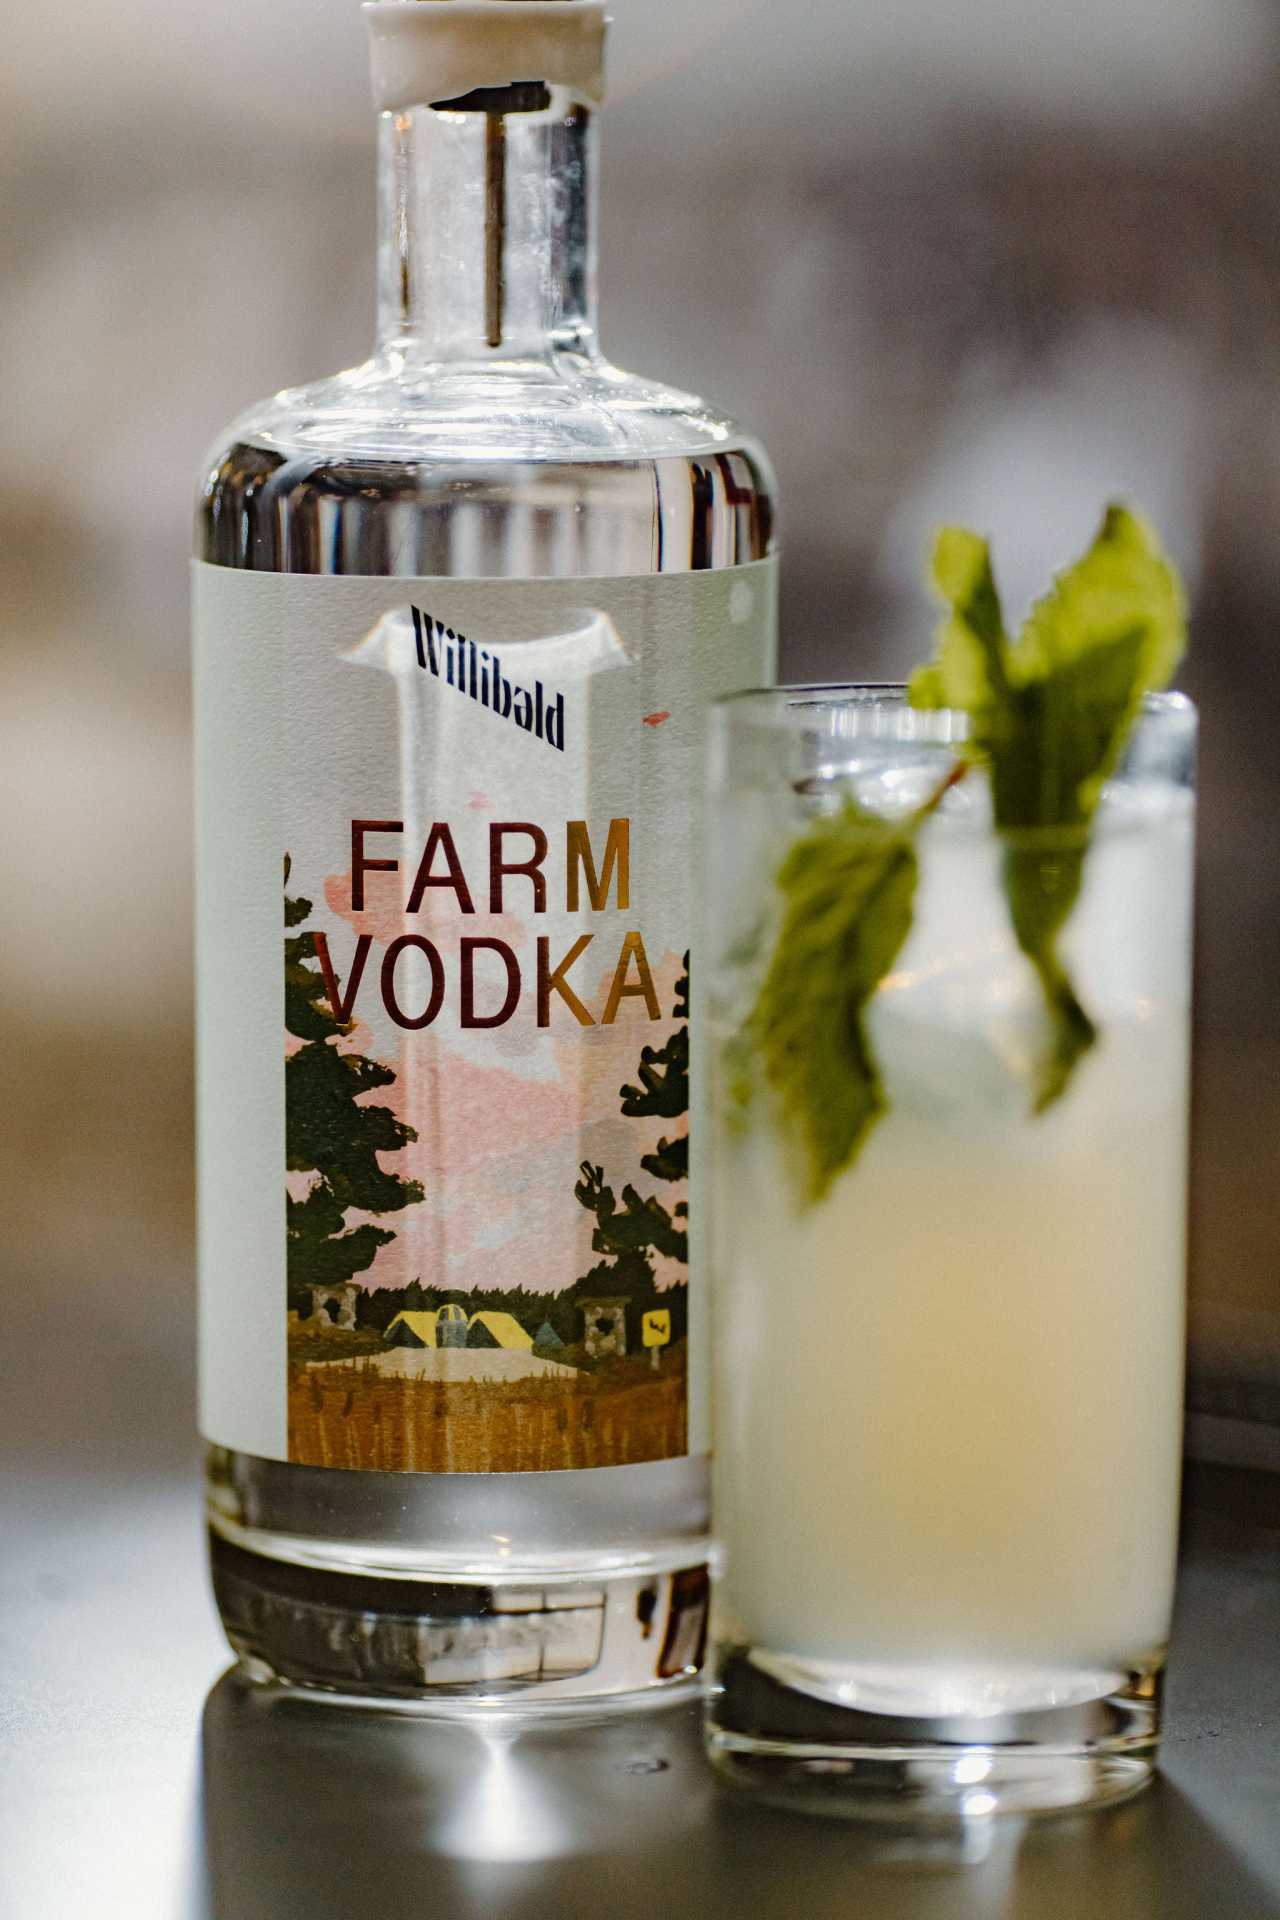 Willibald Farm Vodka at Foodism 40